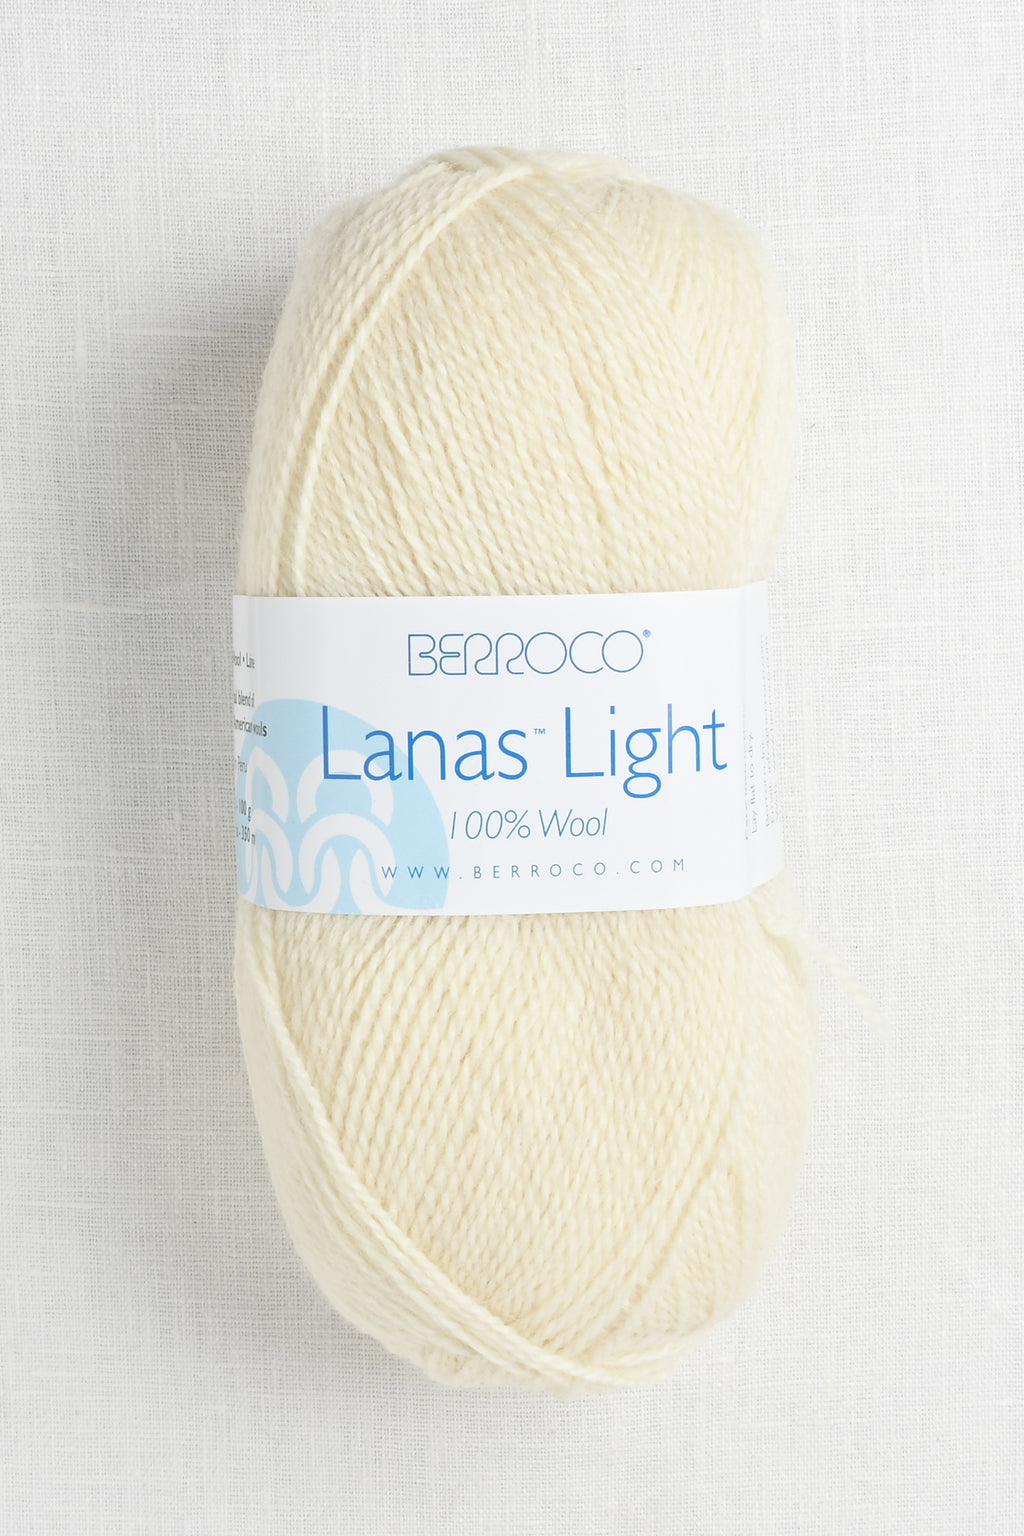 Berroco Lanas Light 7801 Cream